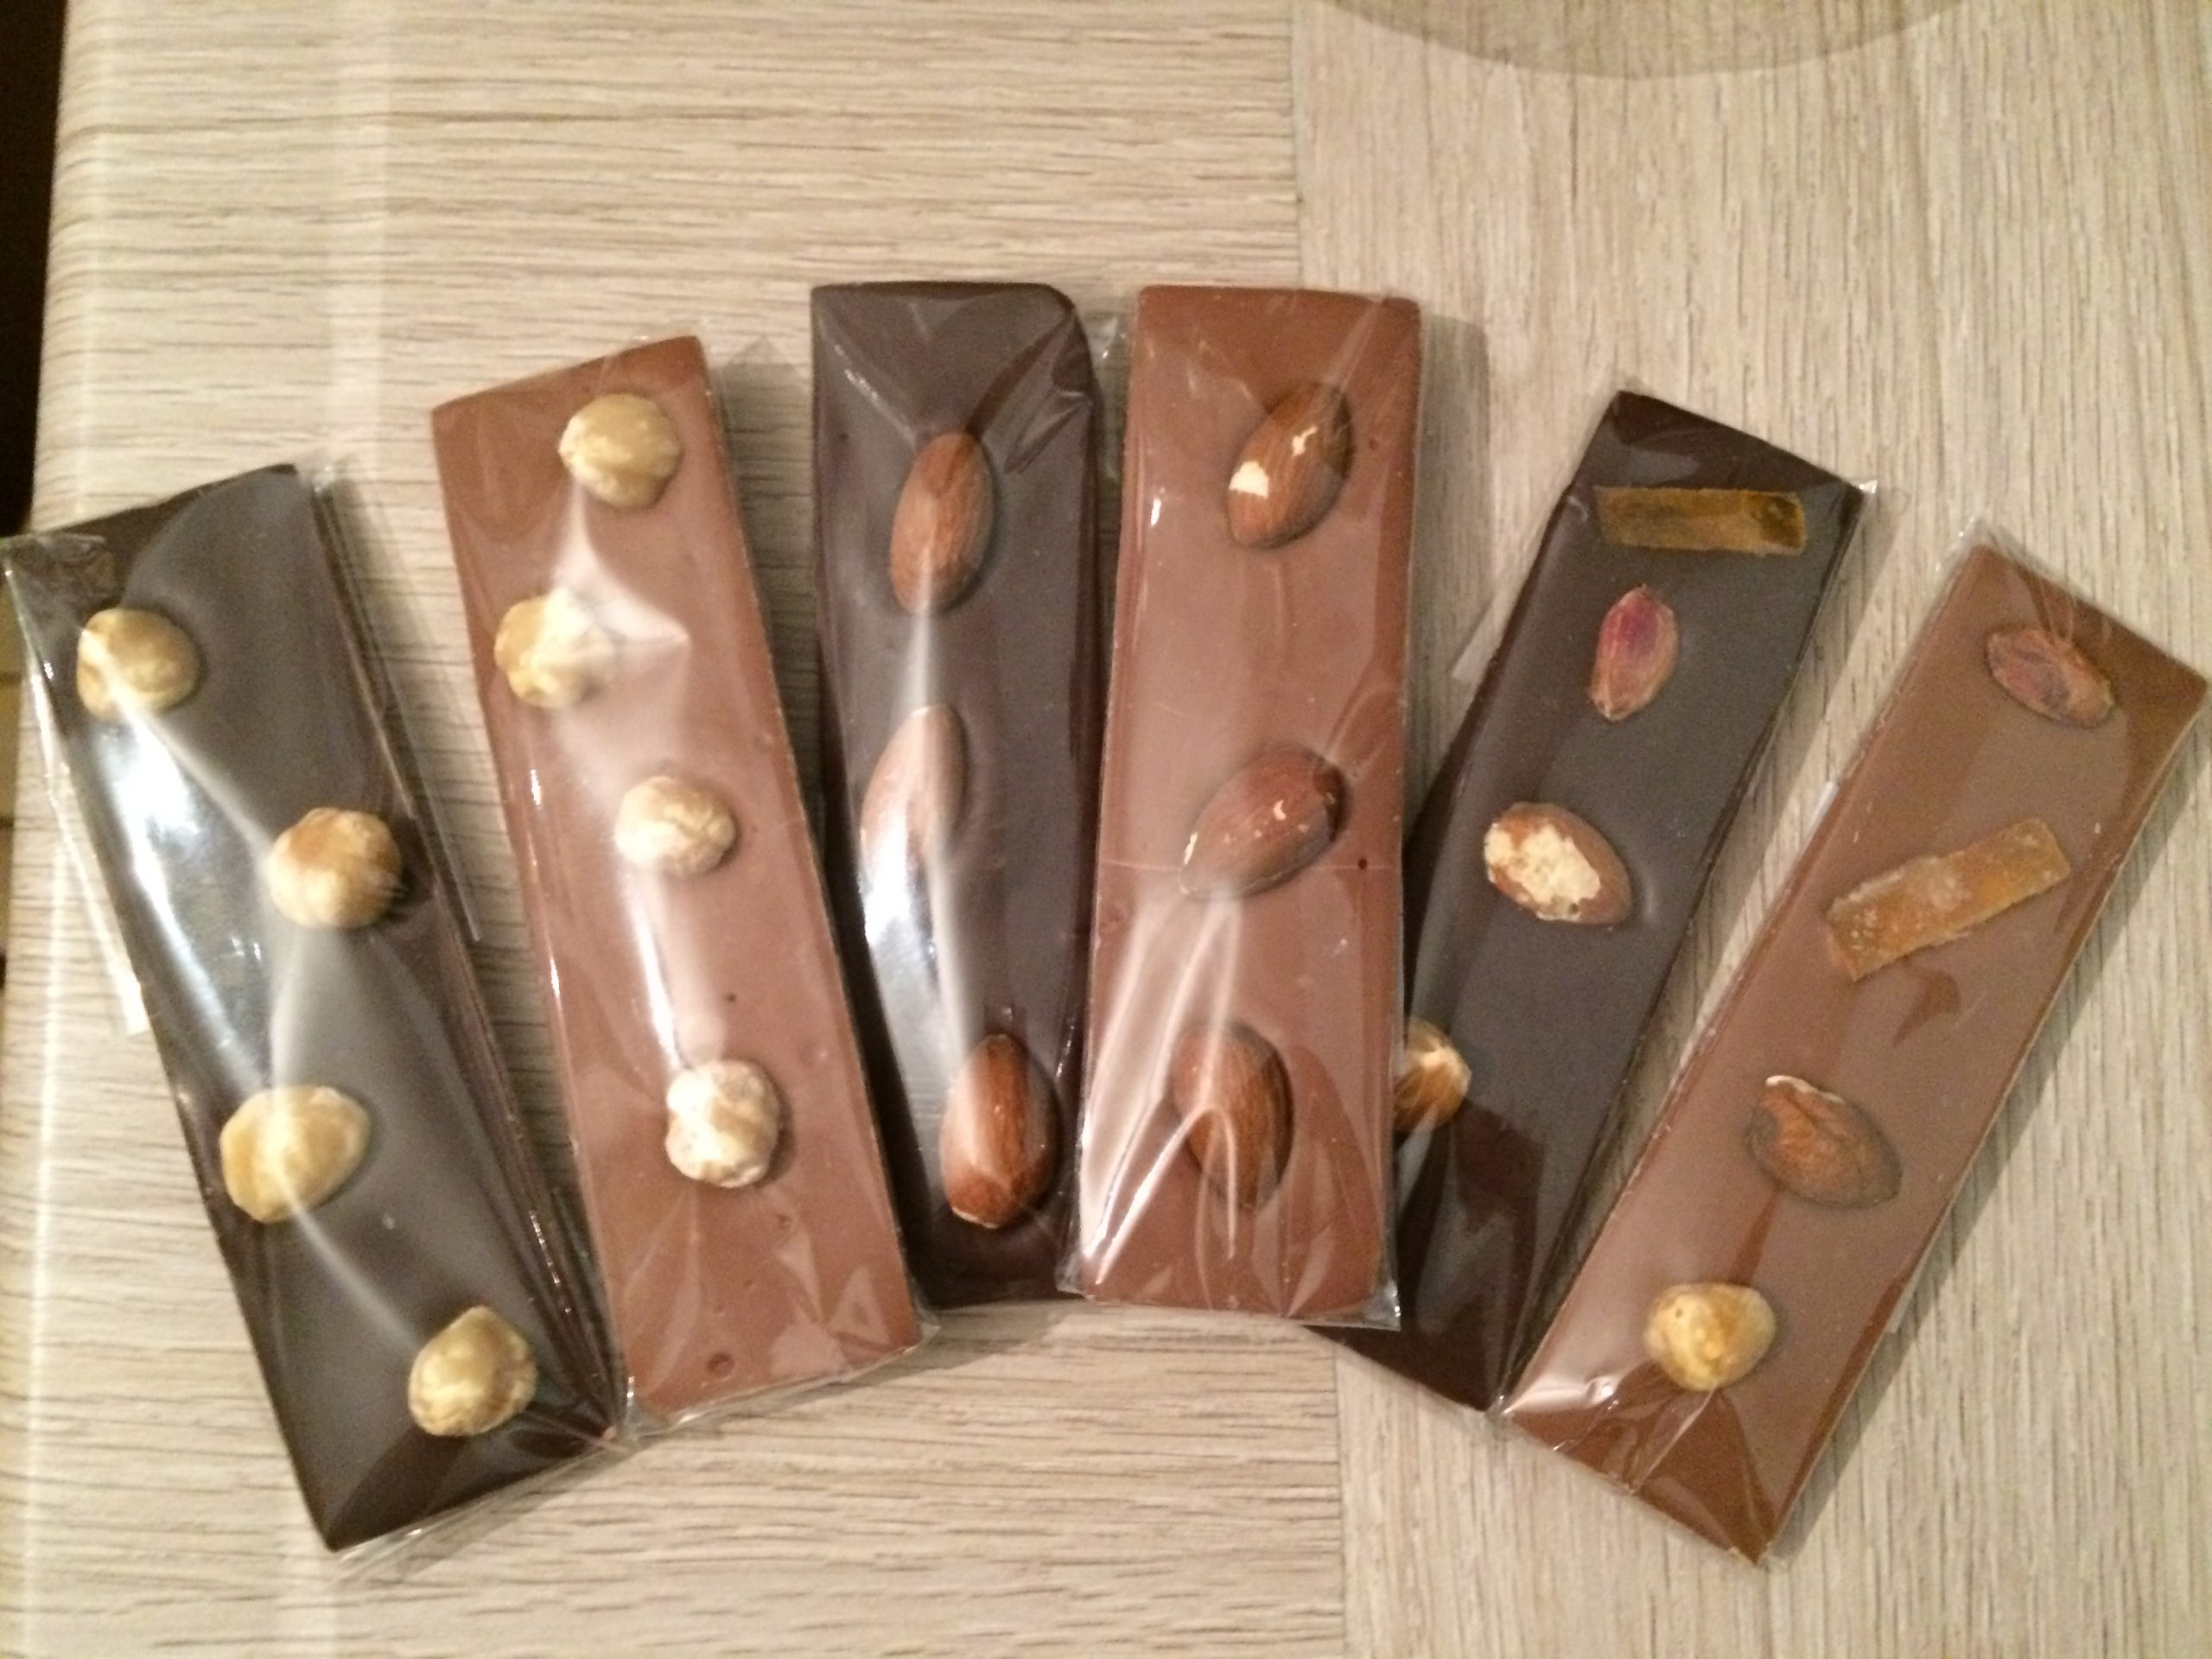 Barre chocolat - Chocolartiste